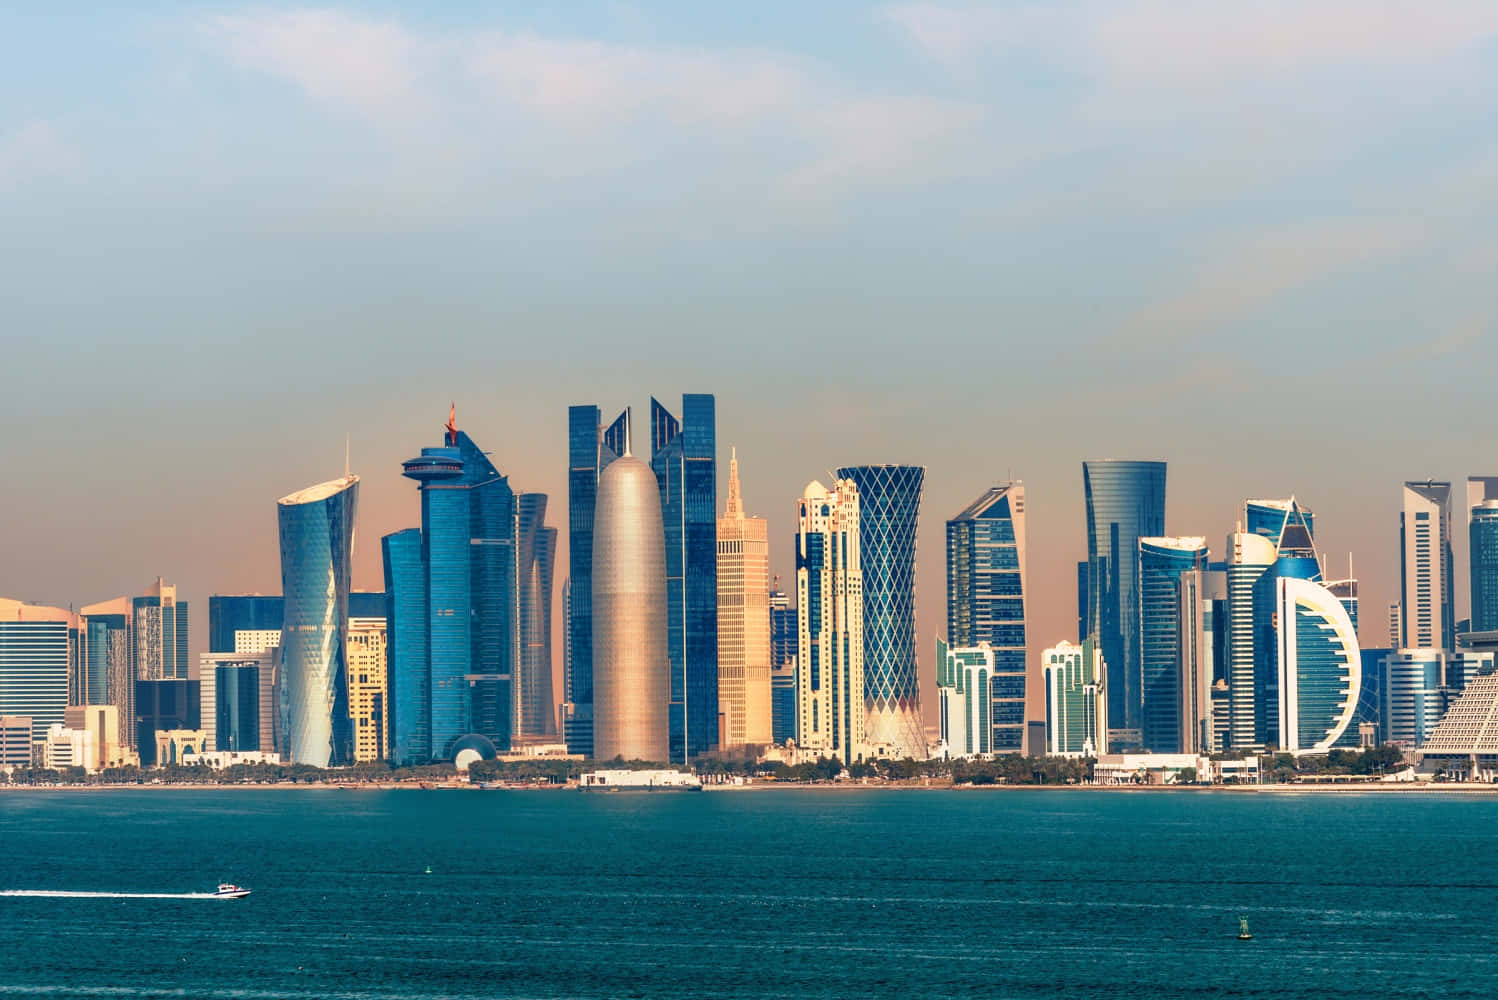 Qatari skyline of Doha